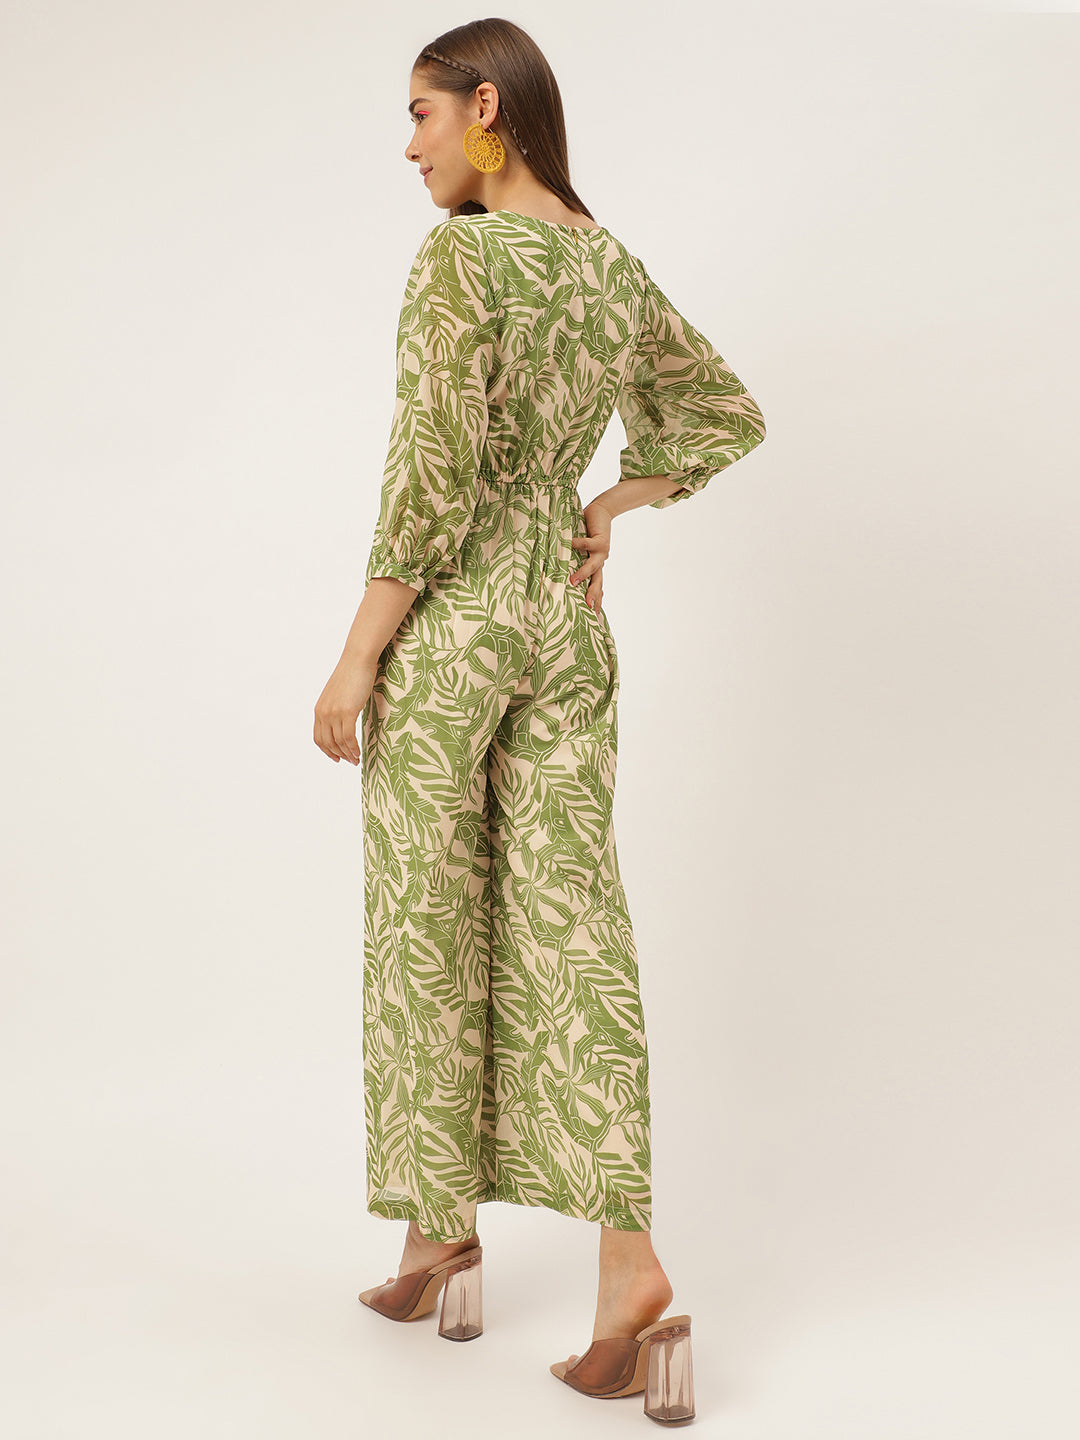 Masakali.co Jumpsuit for Women Olive Green Colour.